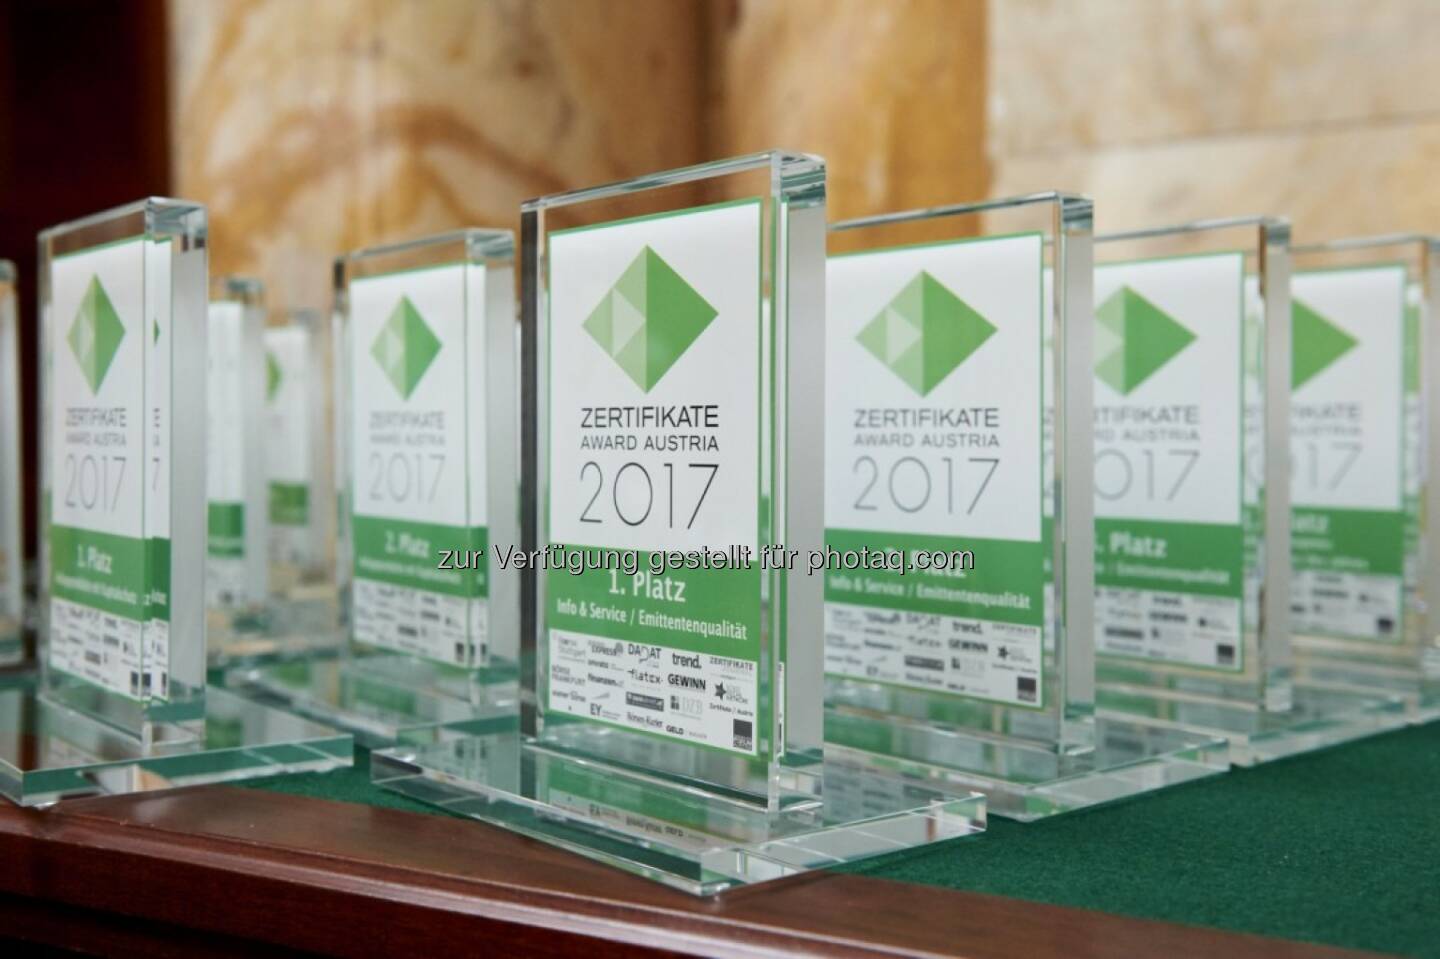 Zertifikate Award Austria 2017 (Fotocredit: Zertifikate Forum Austria)